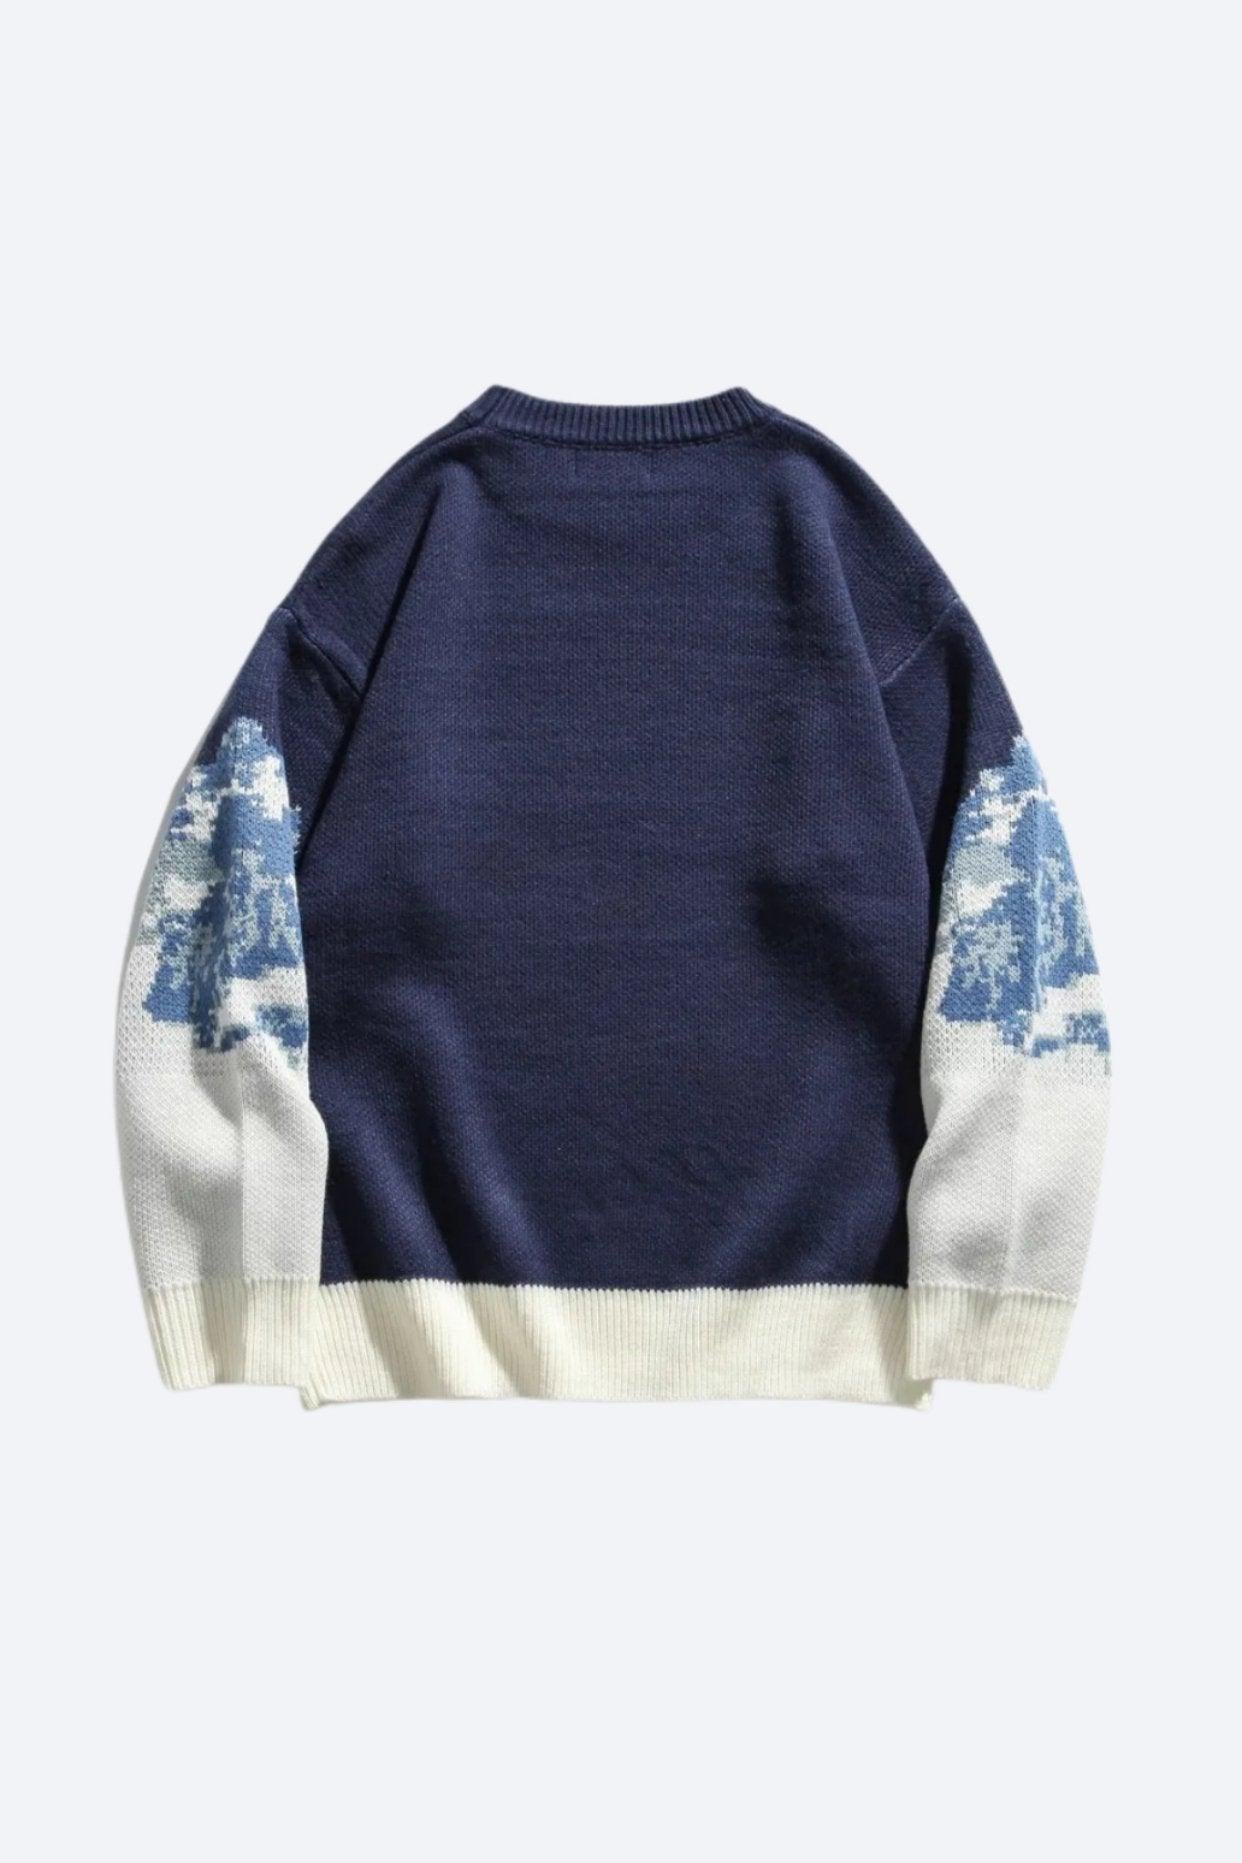 Snow Mountain Design Sweater VERMANY – Vermany